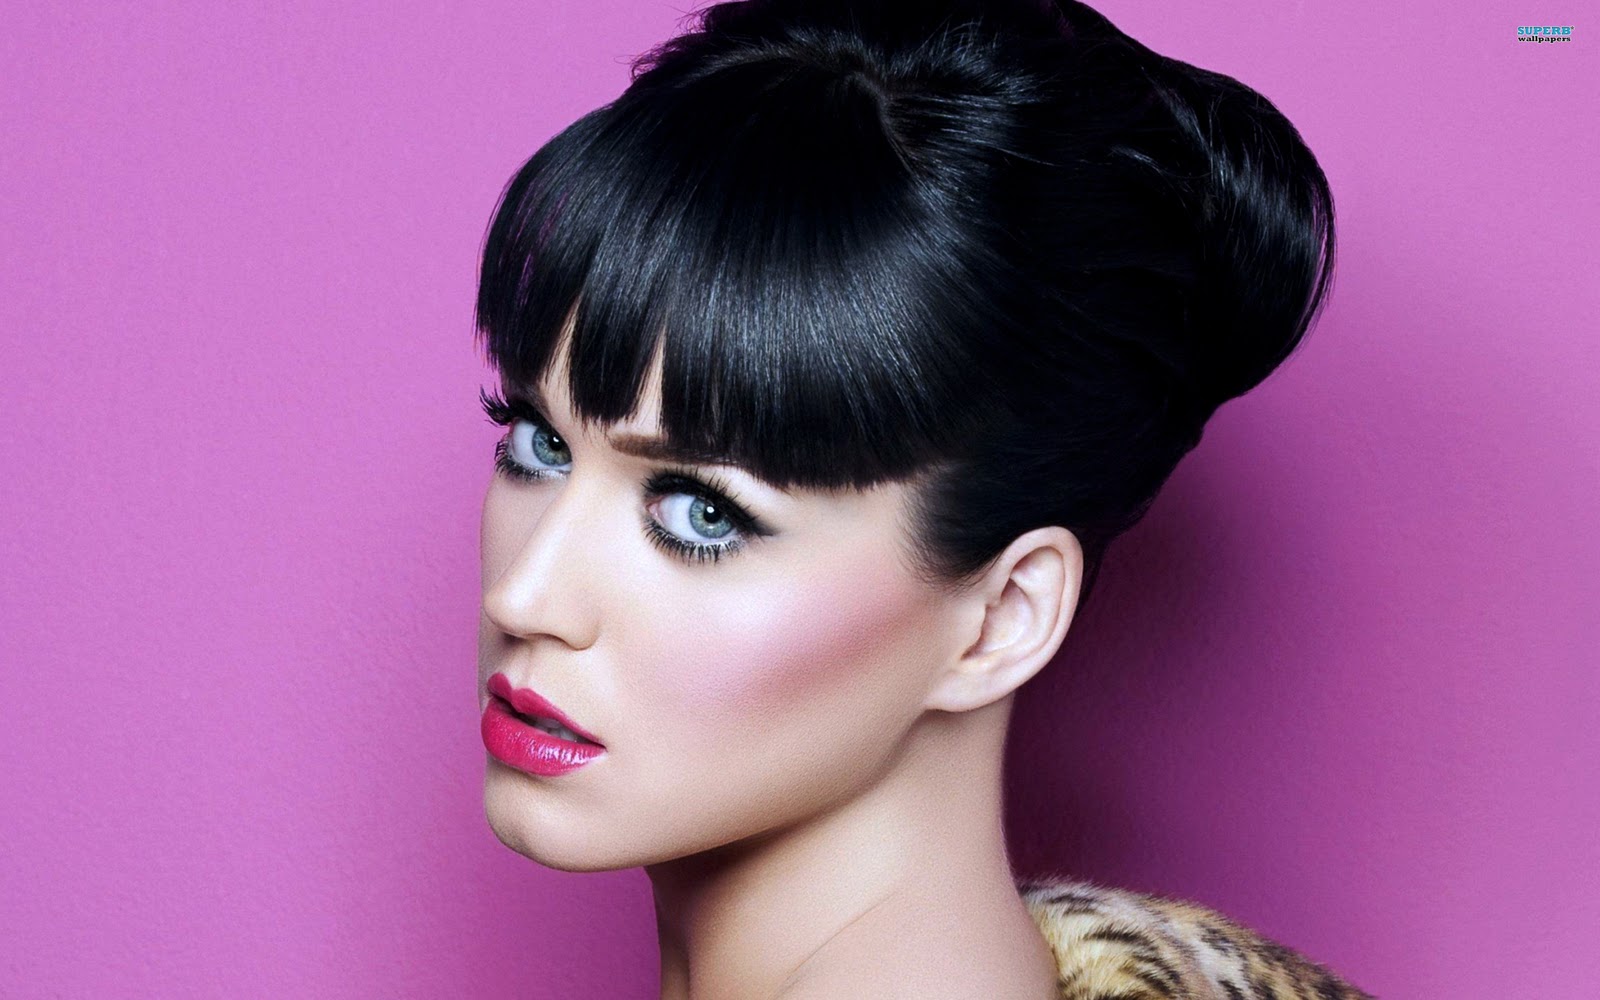 Katy Perry Best Photos - Home Facebook